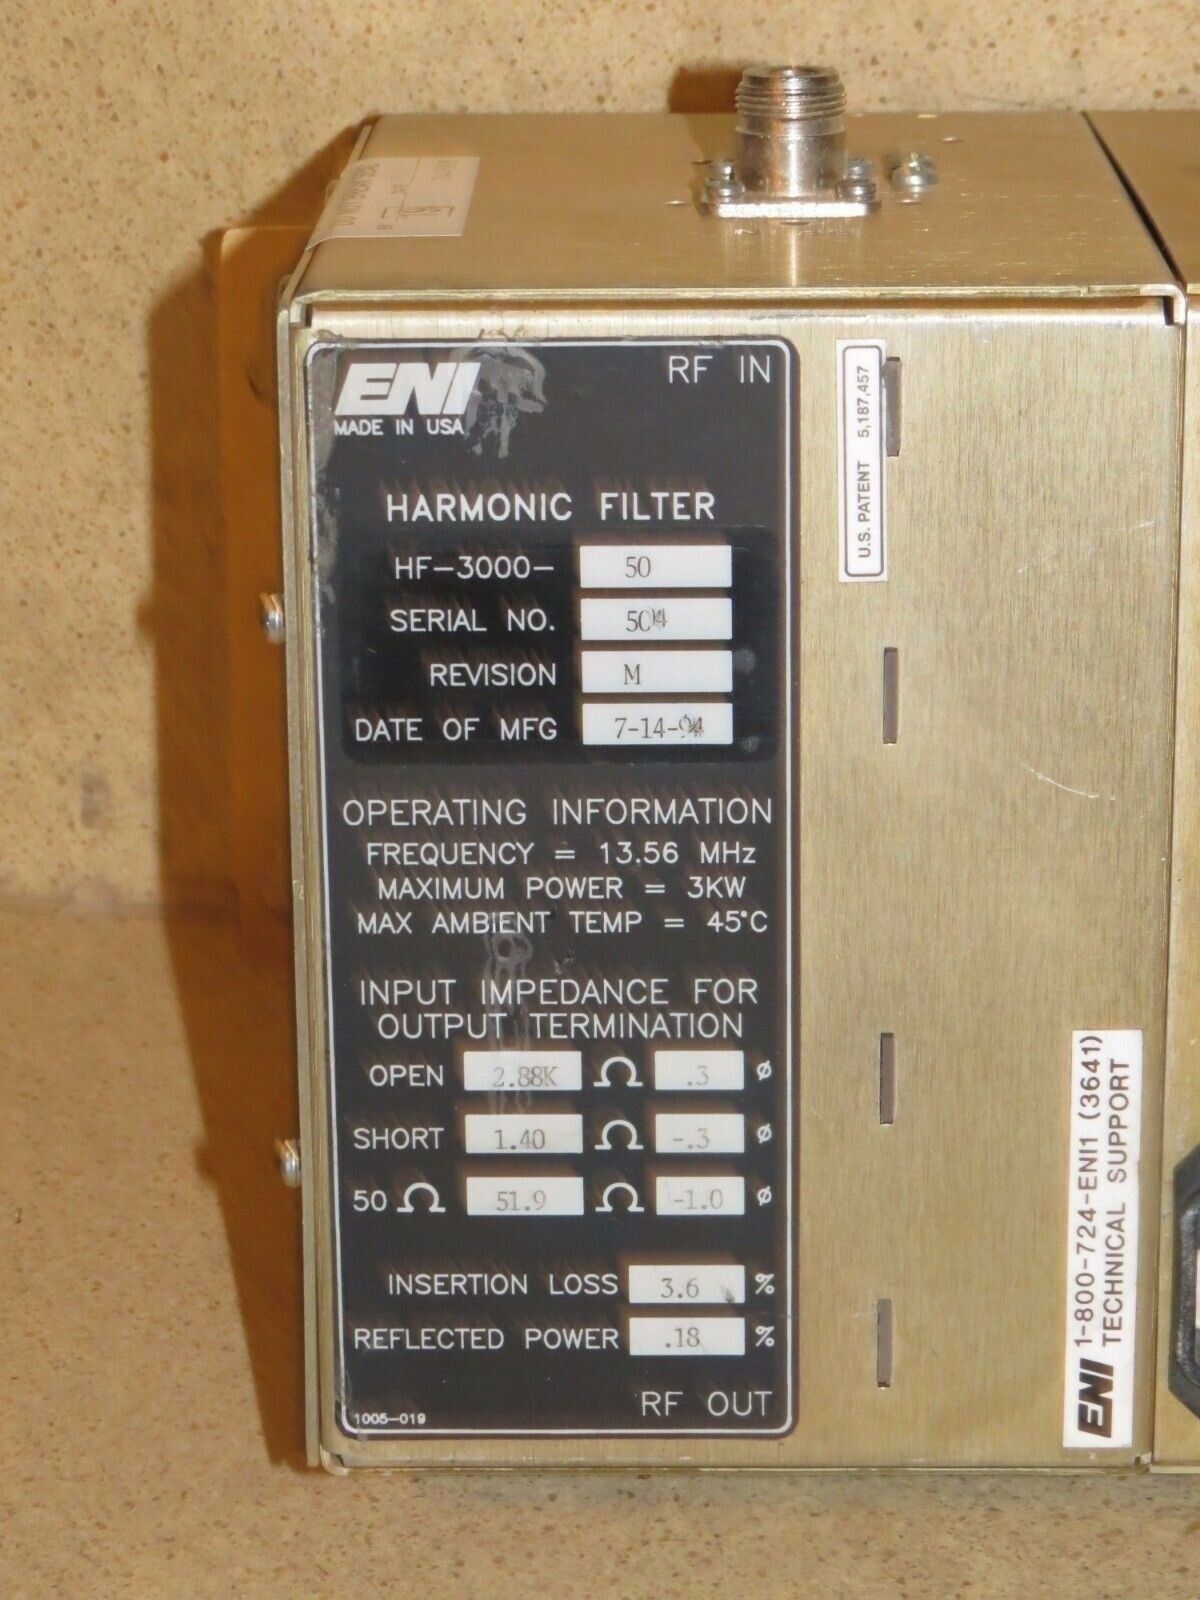 ENI harmonic滤波器型号HF-3000-50 大量供应 原装正品 